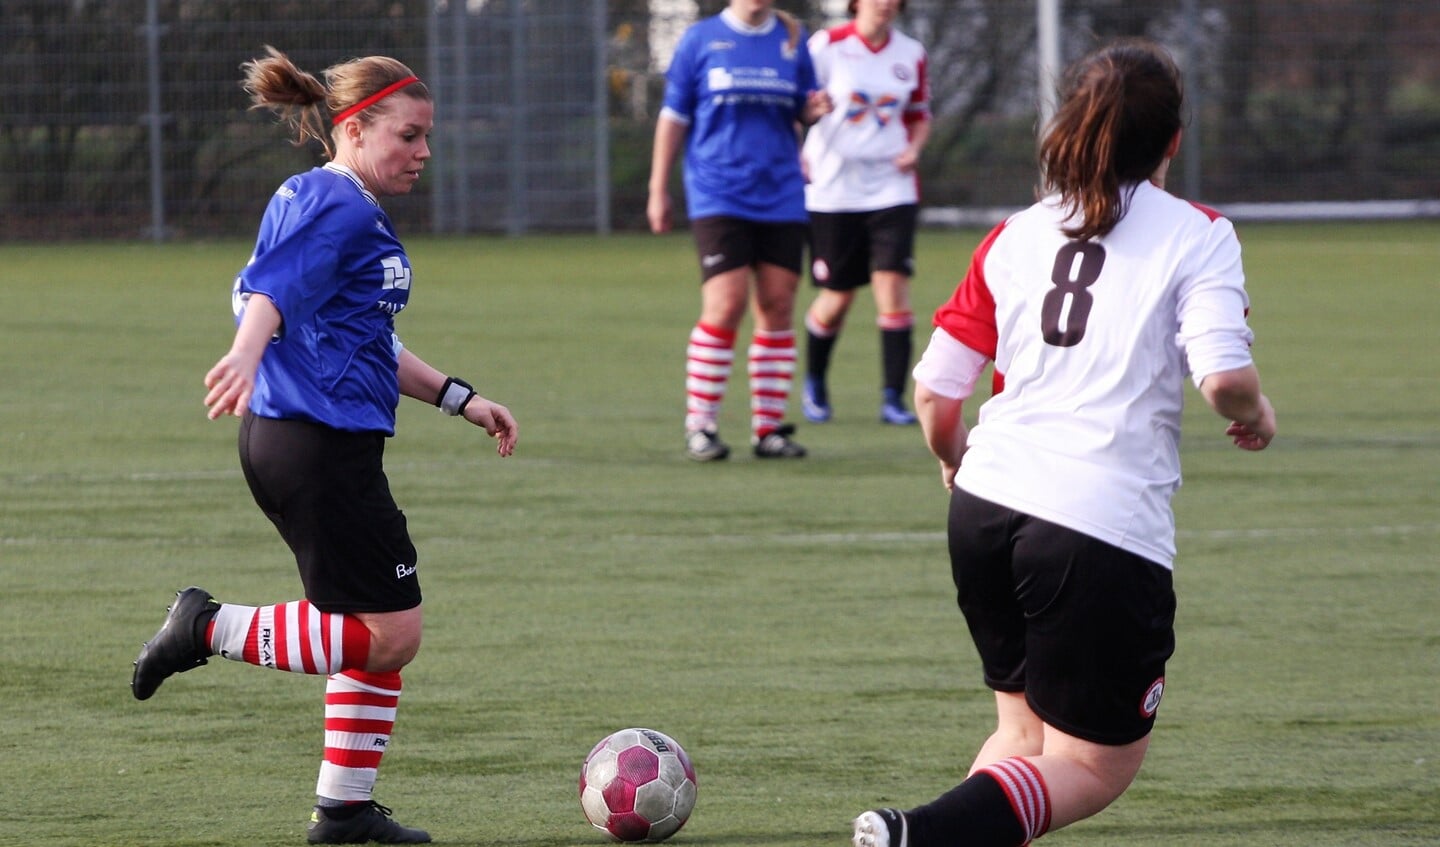 RKAVV-routinier Claudia van der Hulst scoorde 1-0 (archieffoto: AW).